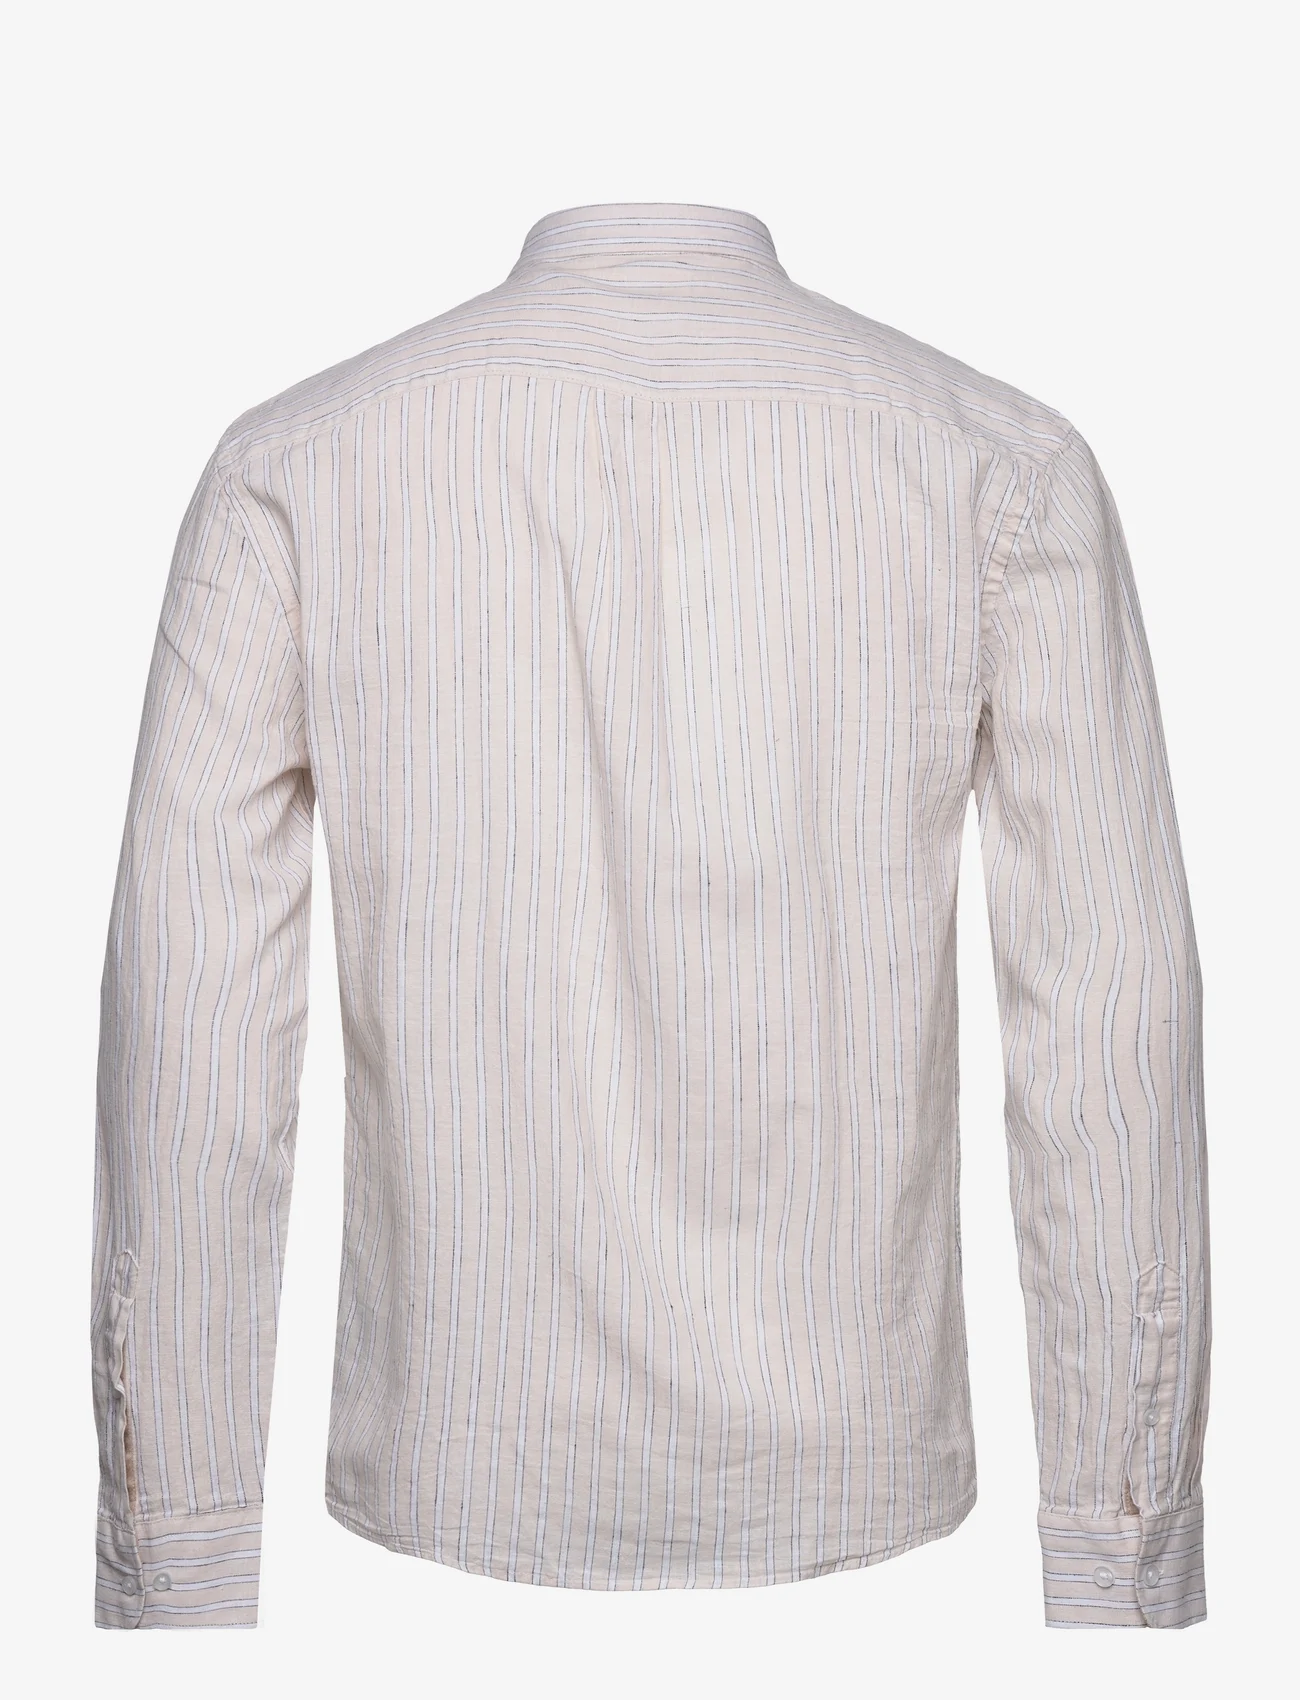 Lindbergh - Striped cotton/linen shirt L/S - lina krekli - sand - 1